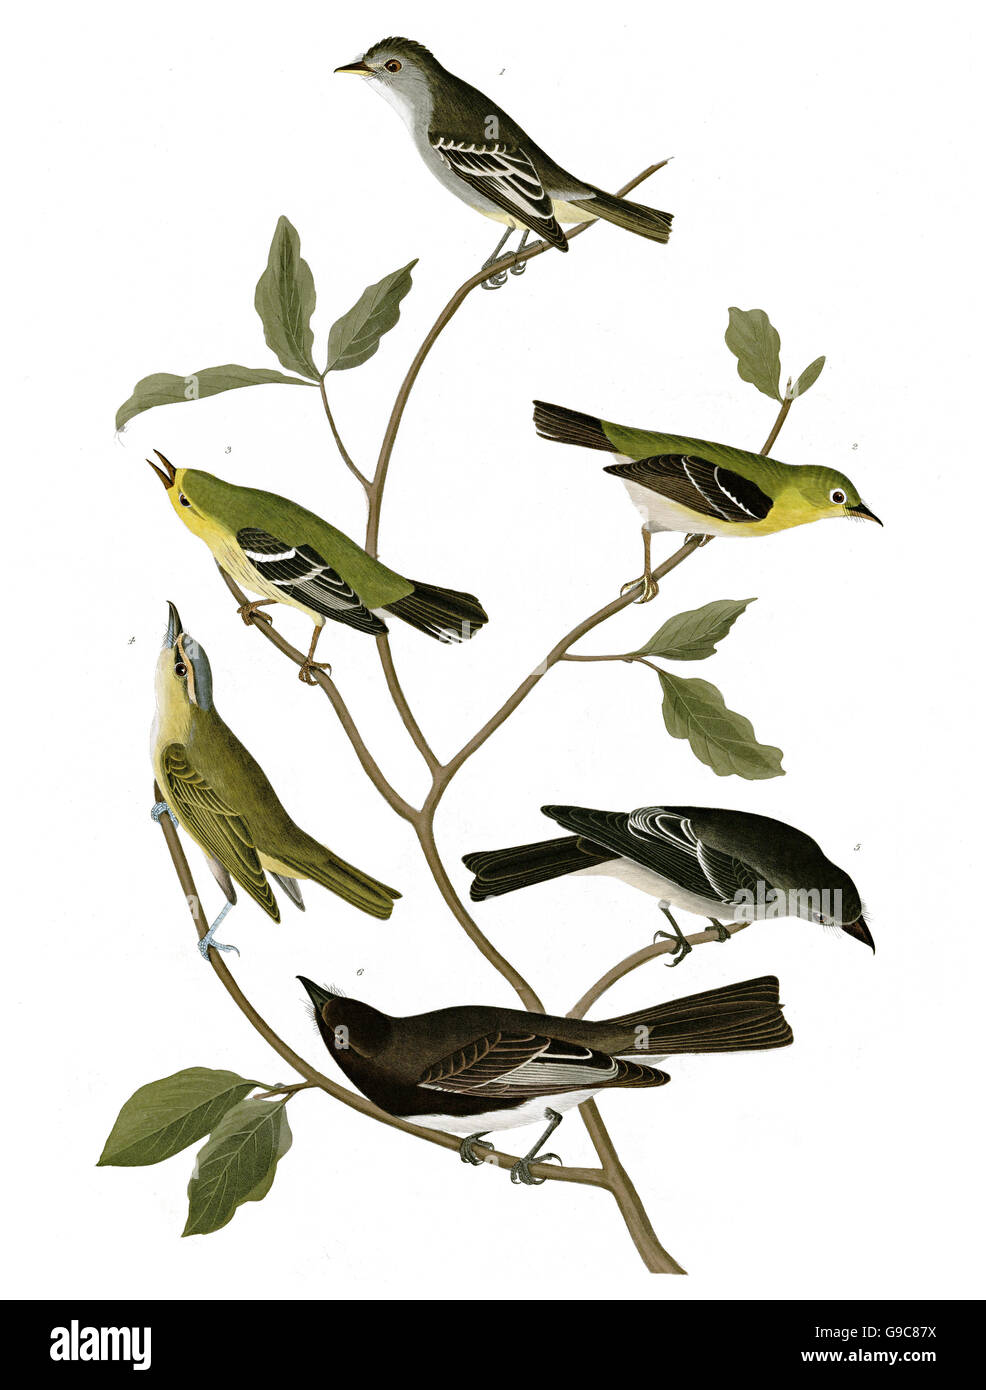 1 Small-headed Flycatcher, Mystery birds, existence unclear, Muscicapa minuta, Small-headed Flycatcher, 2 Western Wood-Pewee, Stock Photo